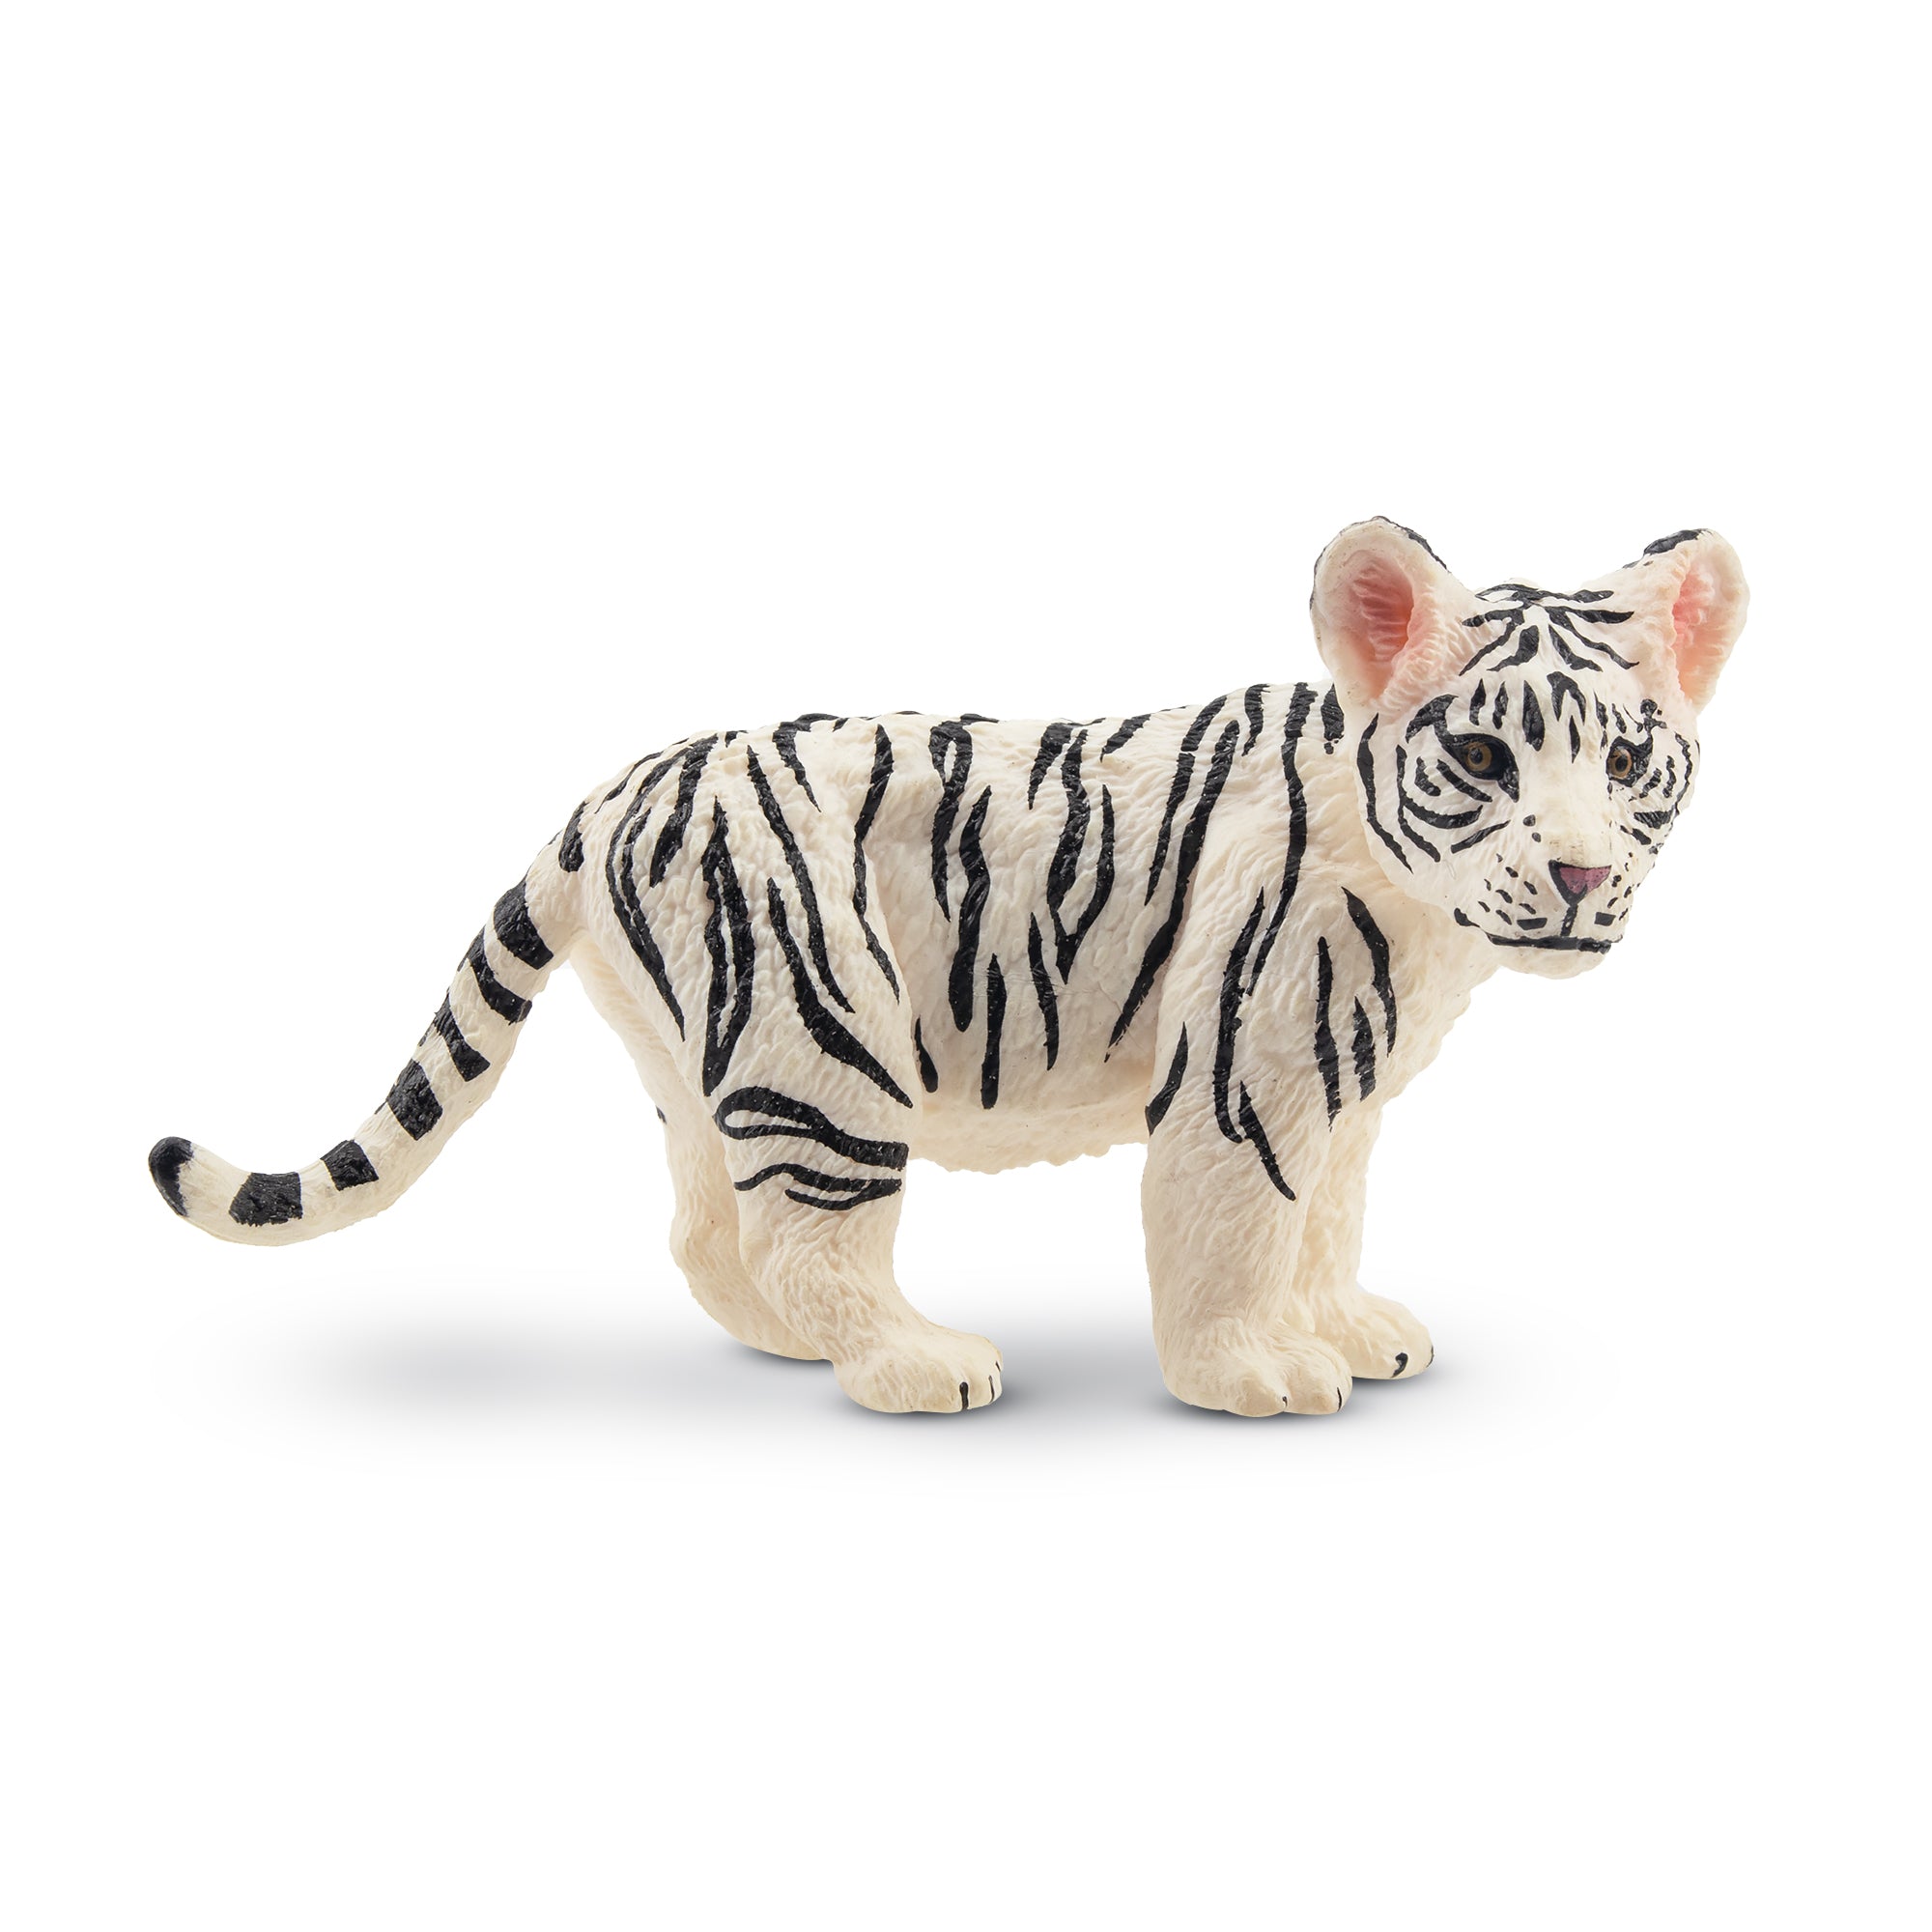 Toymany Standing White Tiger Cub Figurine Toy - 1